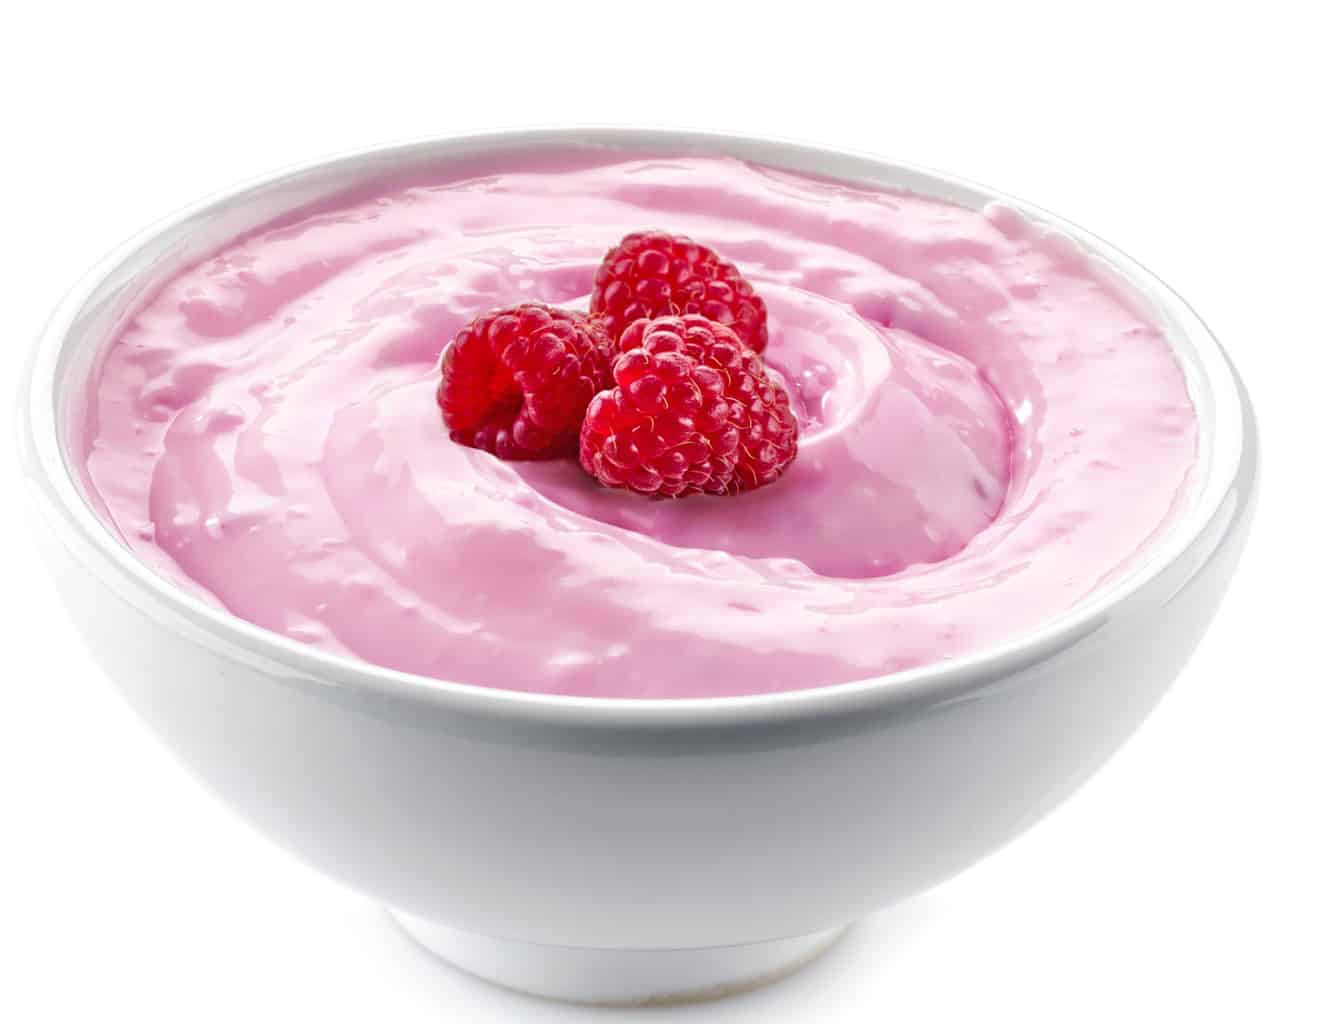 Keto Raspberry Lemonade Mousse in a white bowl